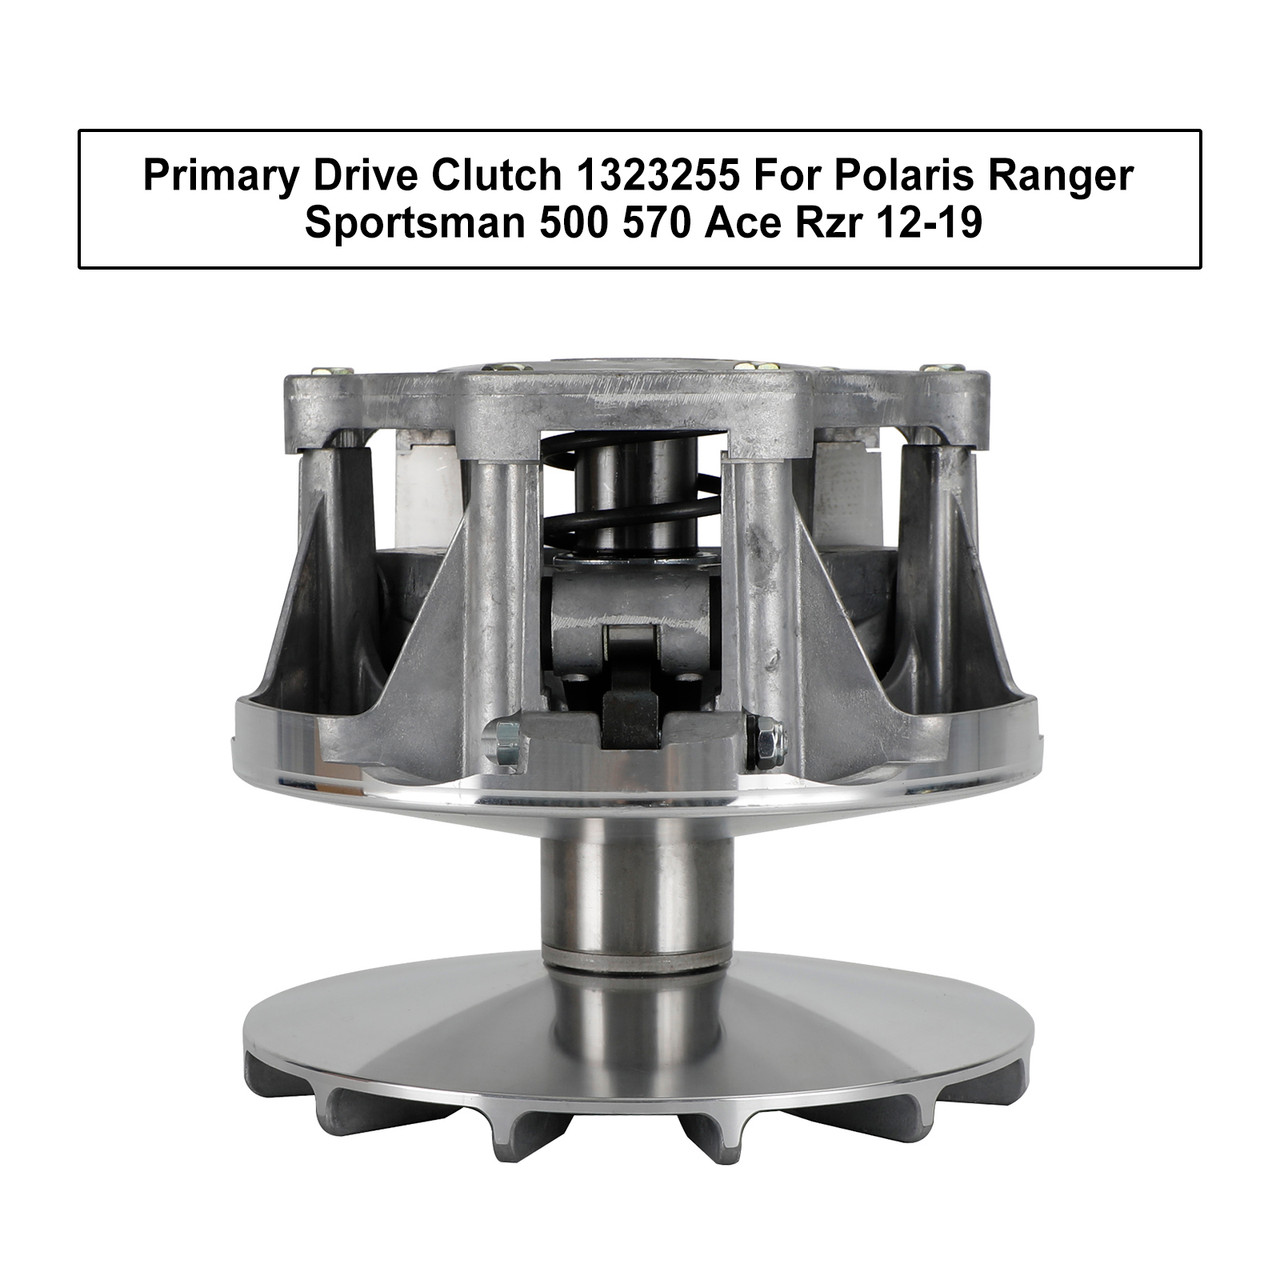 Primary Drive Clutch 1323255 For Polaris Ranger Sportsman 500 570 Ace Rzr 12-19